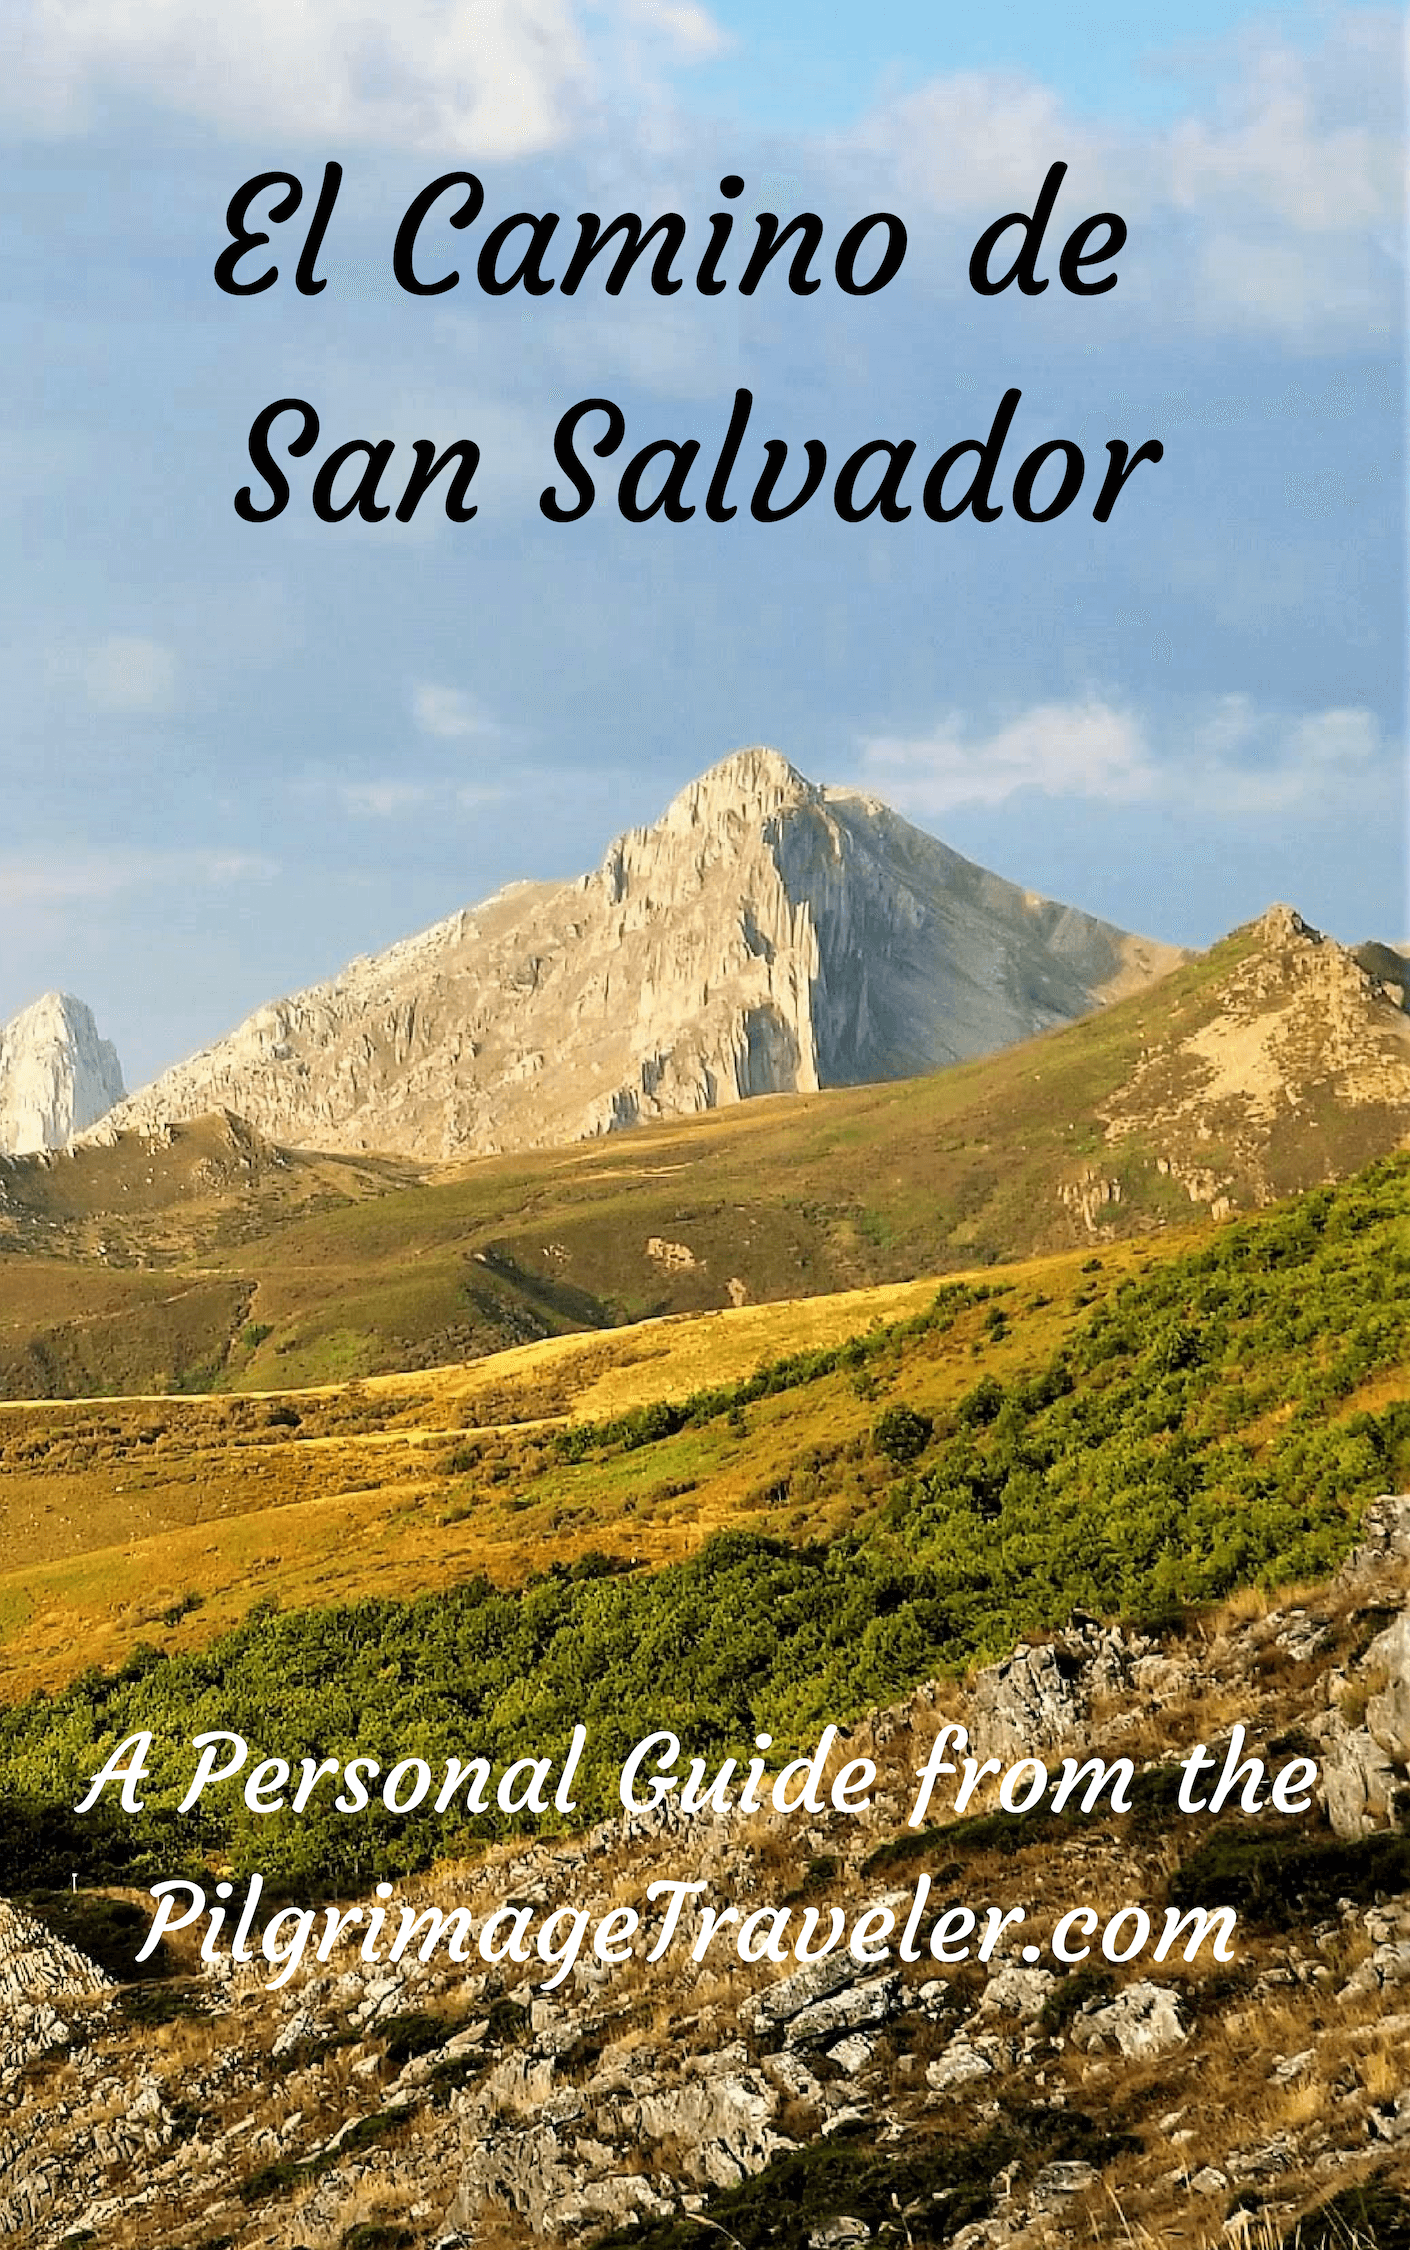 Camino de San Salvador eBook Guide Cover